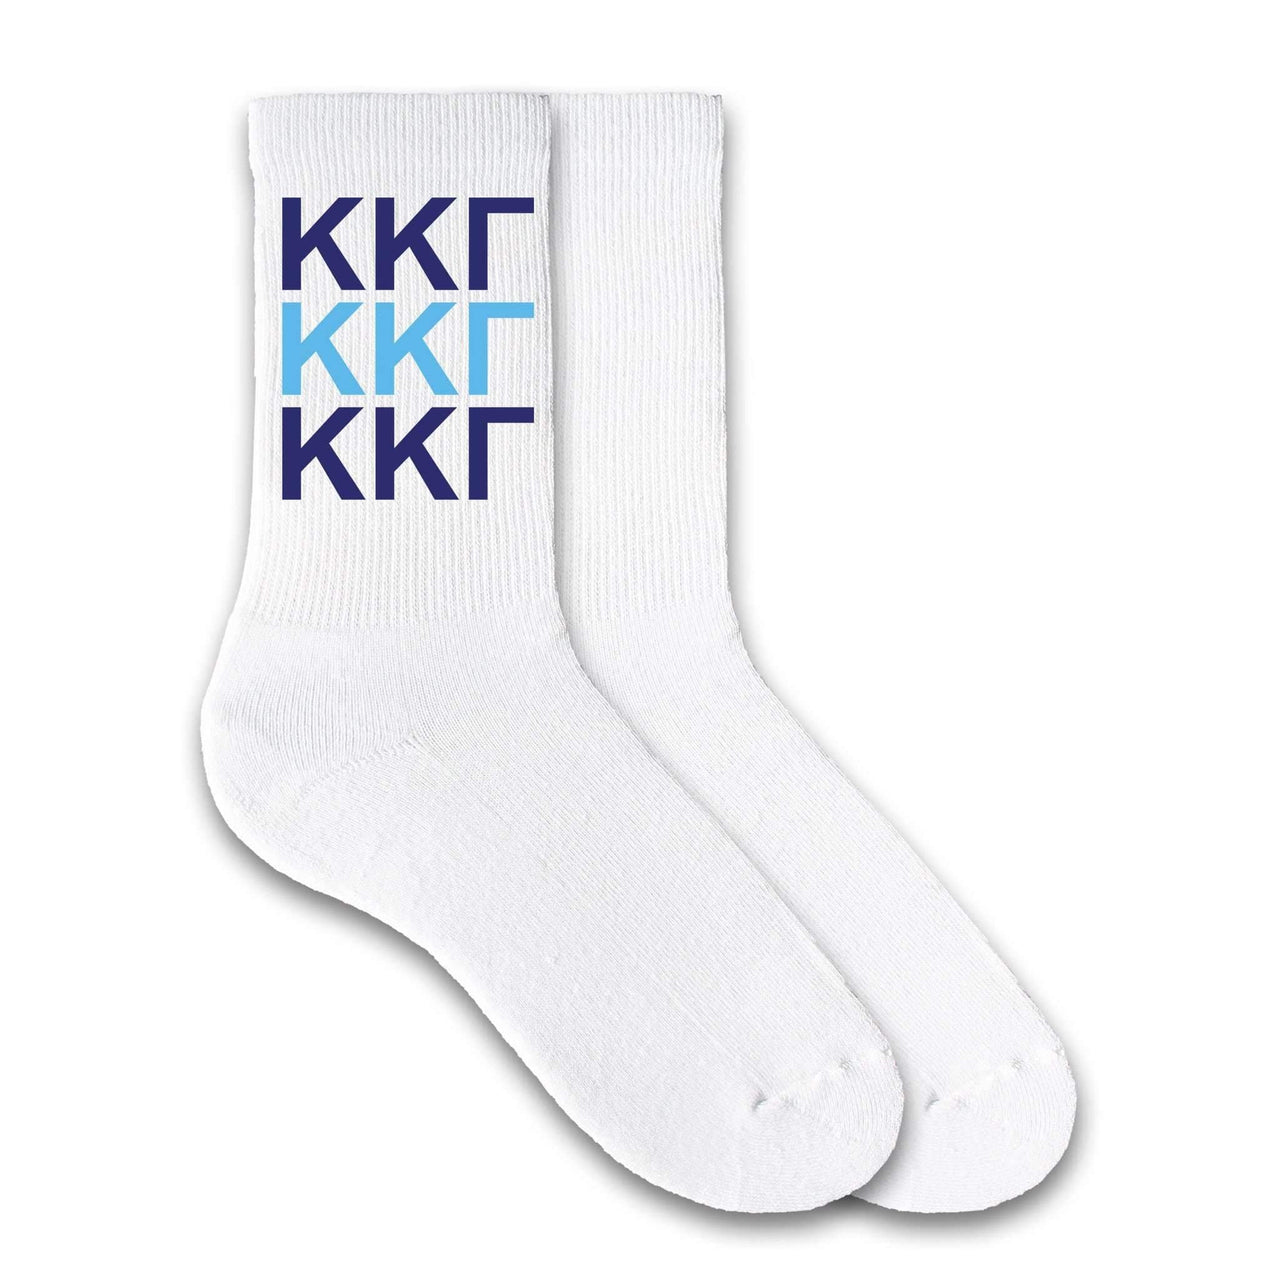 Kappa Kappa Gamma sorority letters repeating pattern custom printed on white cotton crew socks